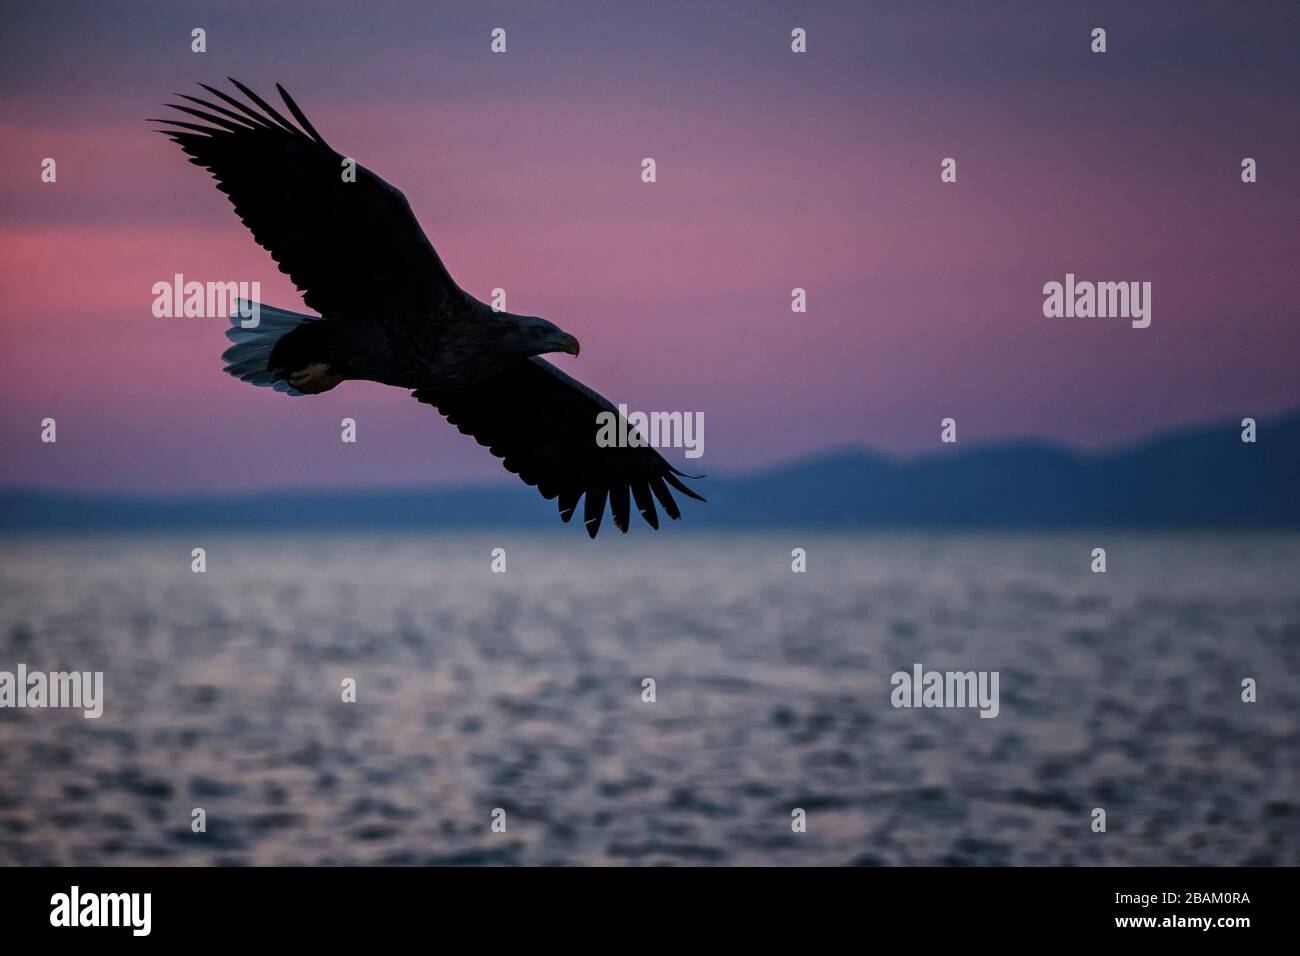 White-tailed eagle in flight, eagle flying against pink sky in Hokkaido, Japan, silhouette of eagle at sunrise, majestic sea eagle, wildlife scene, wa Stock Photo